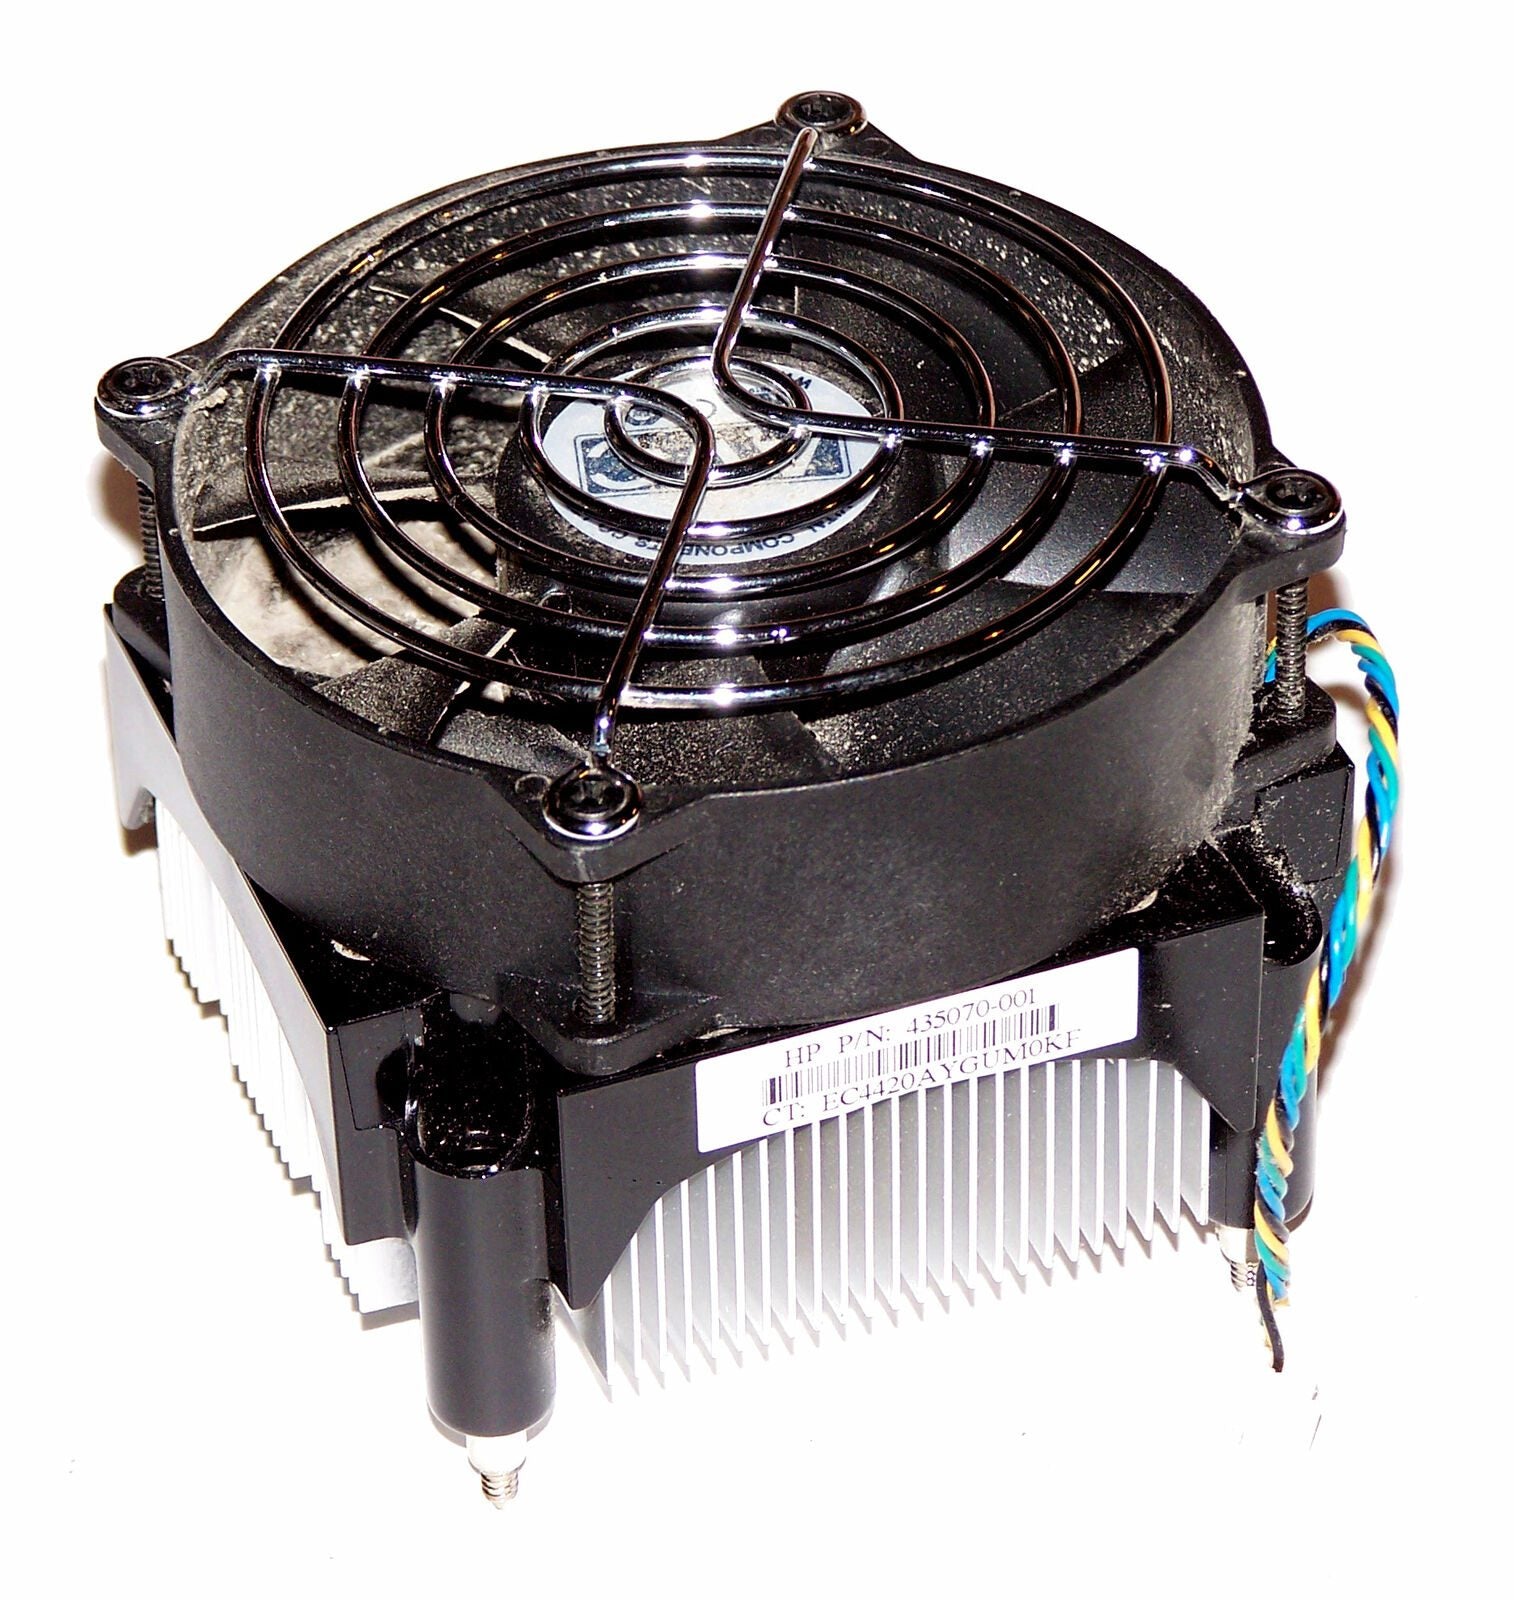 HP 435070-001 dc7700 CMT CABRIO MINI TOWER LGA775 processor heatsink fan